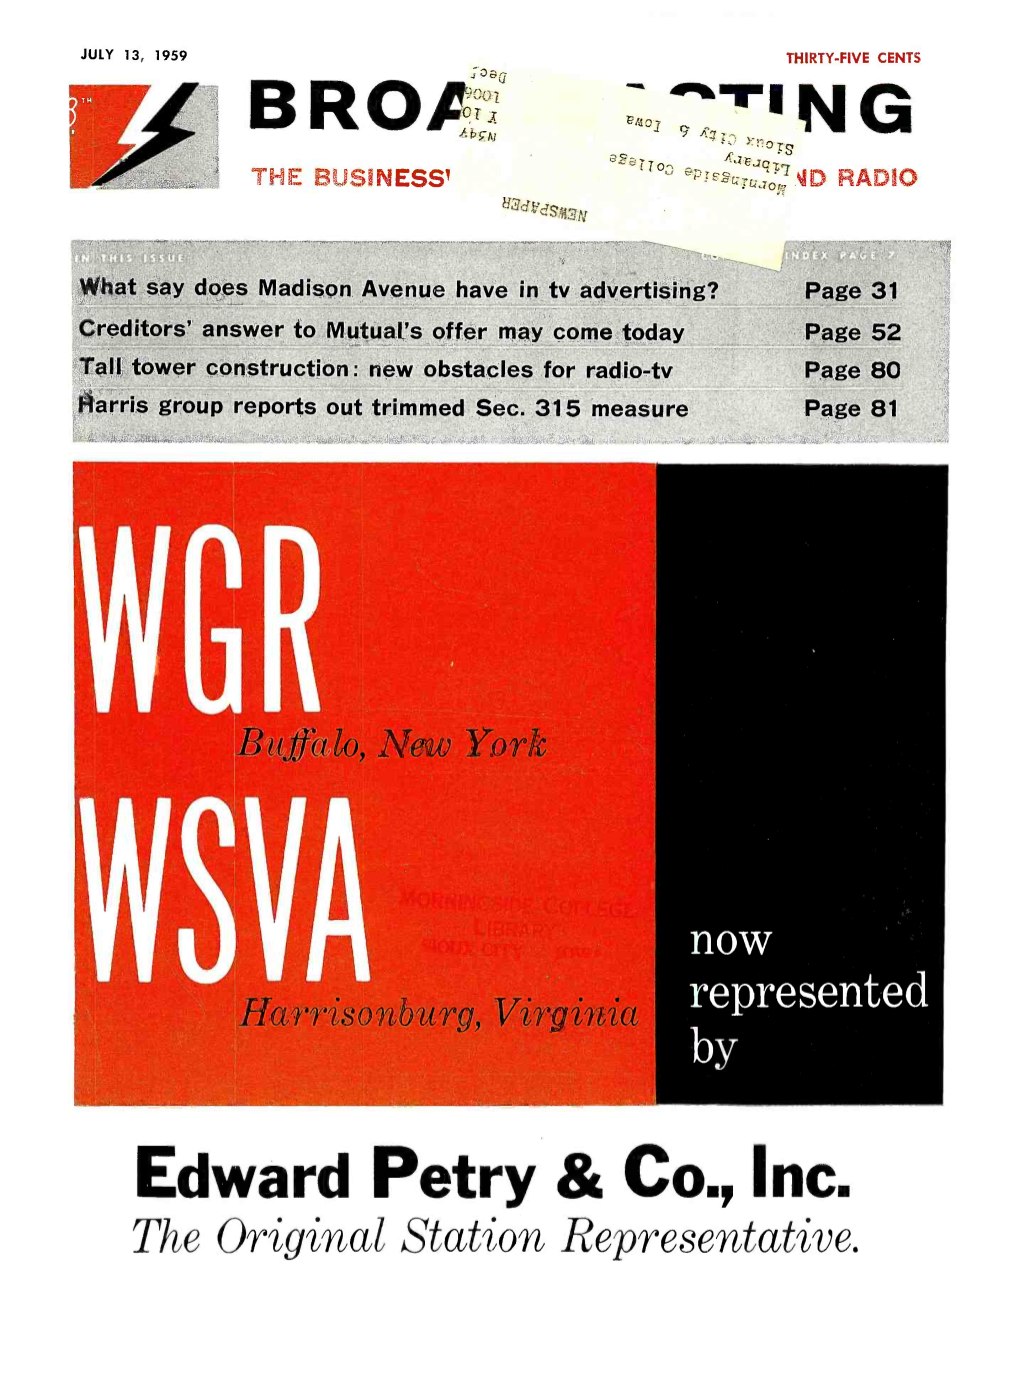 Edward Petry & Co., Inc